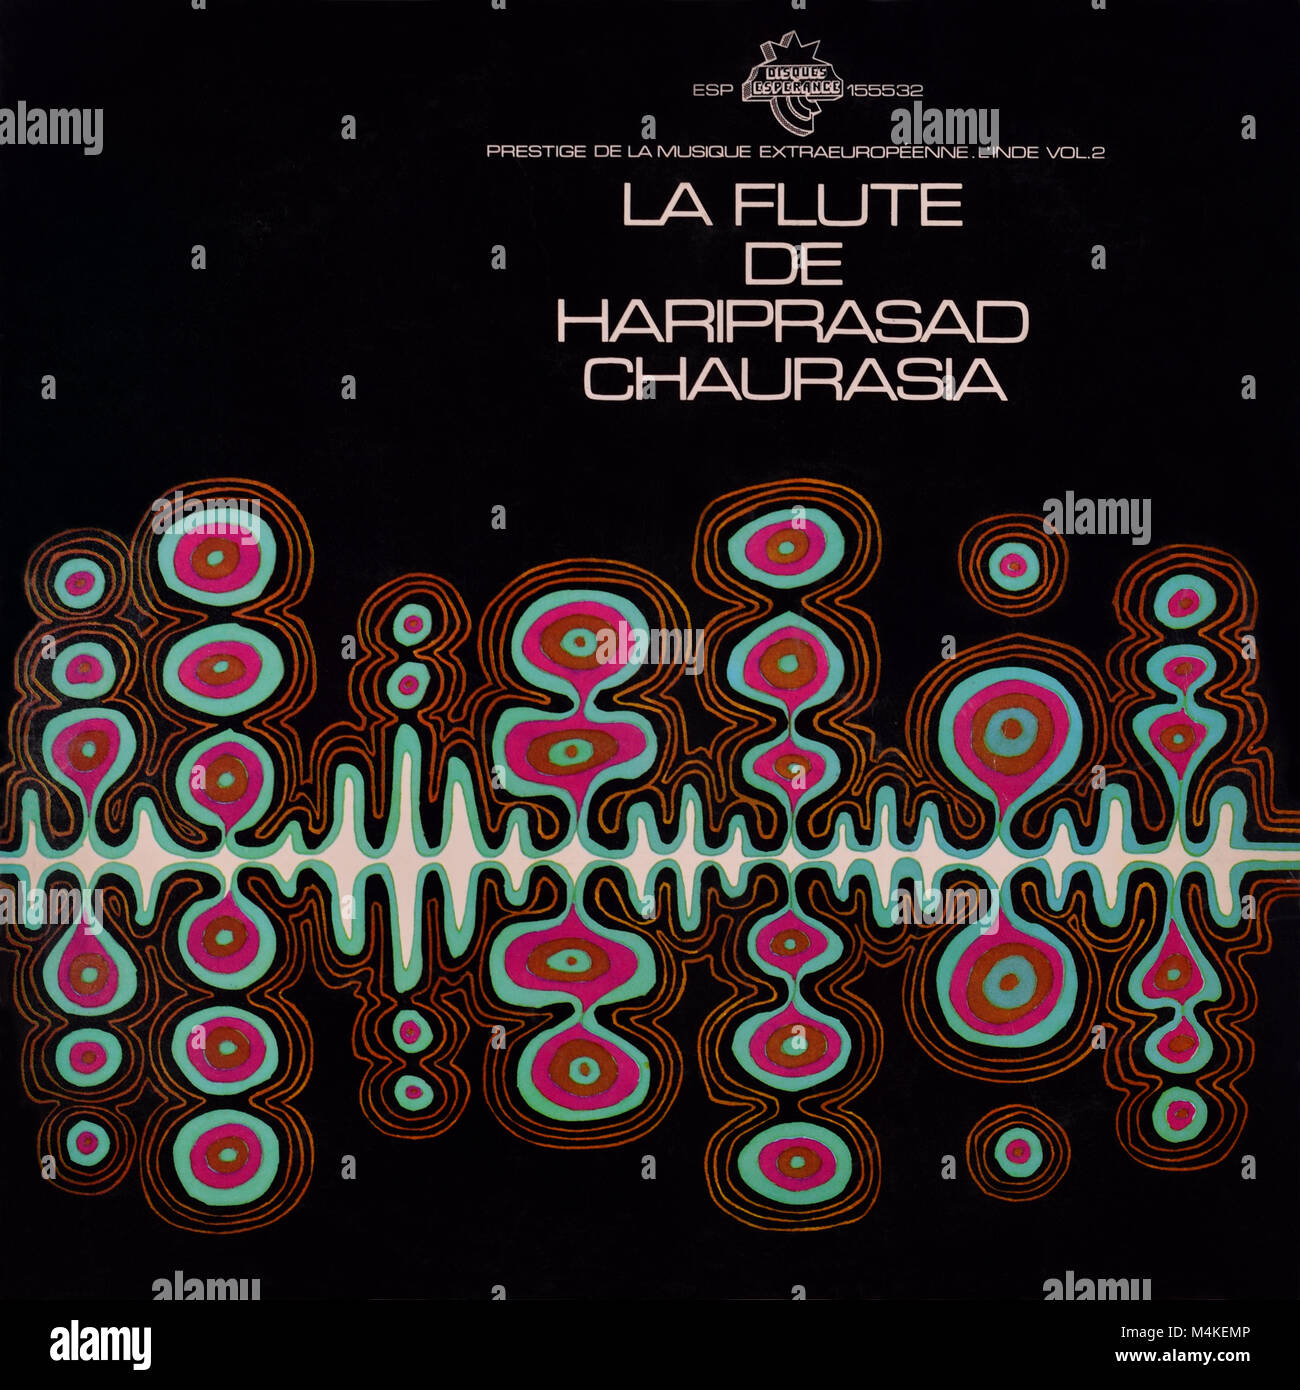 Hari Prasad Chaurasia - original Vinyl Album Cover - La Flute De Hariprasad Chaurasia - 1984 Stockfoto